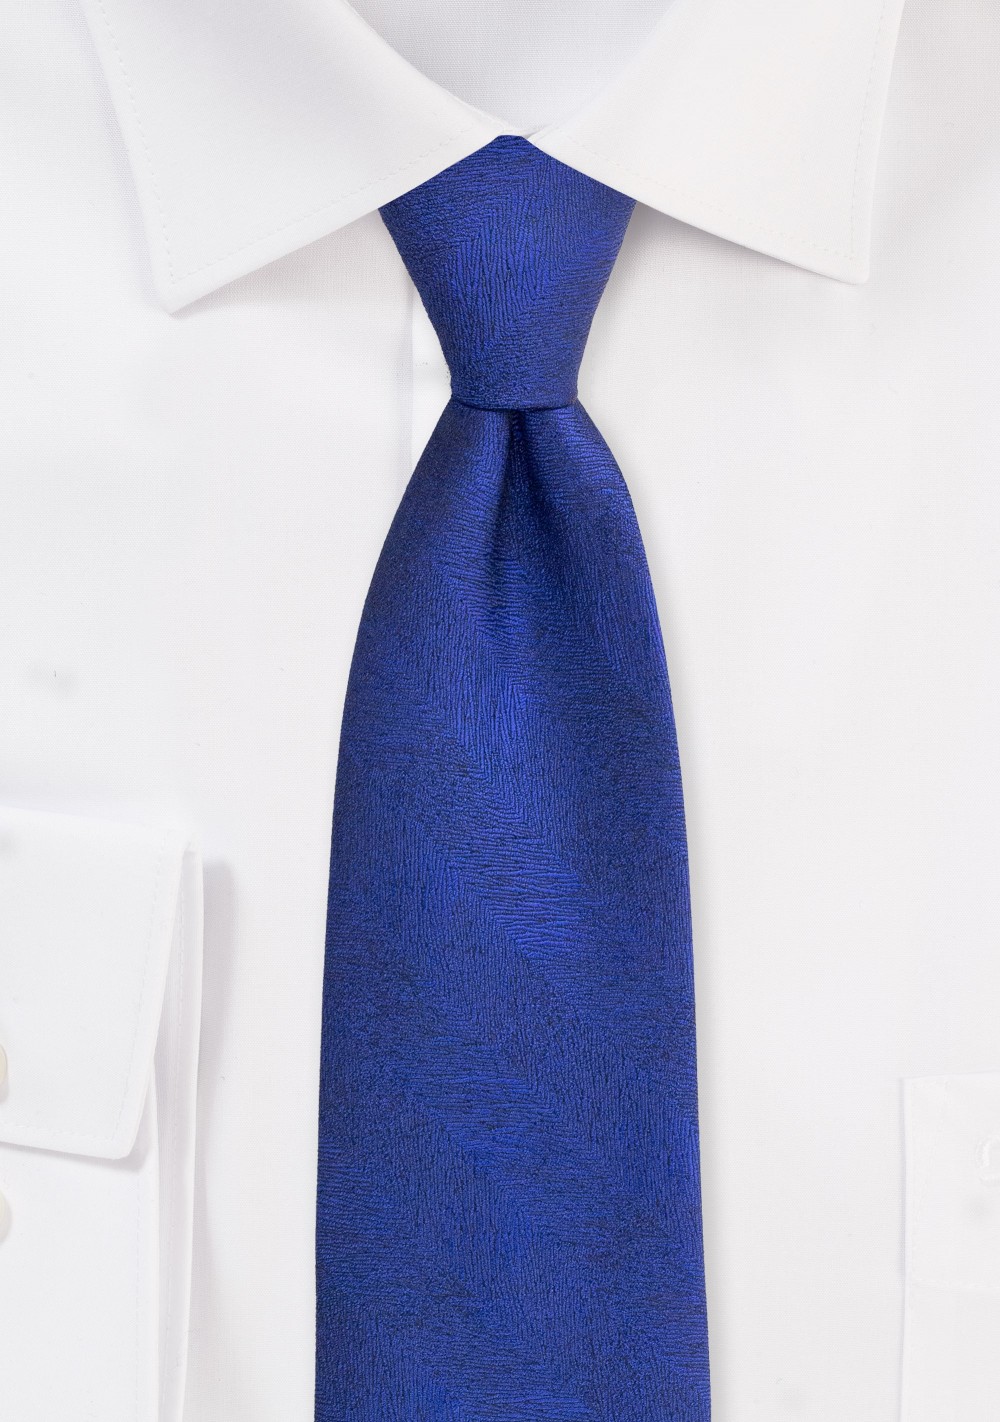 Woodgrain Textured Mens Tie in Dress Blue